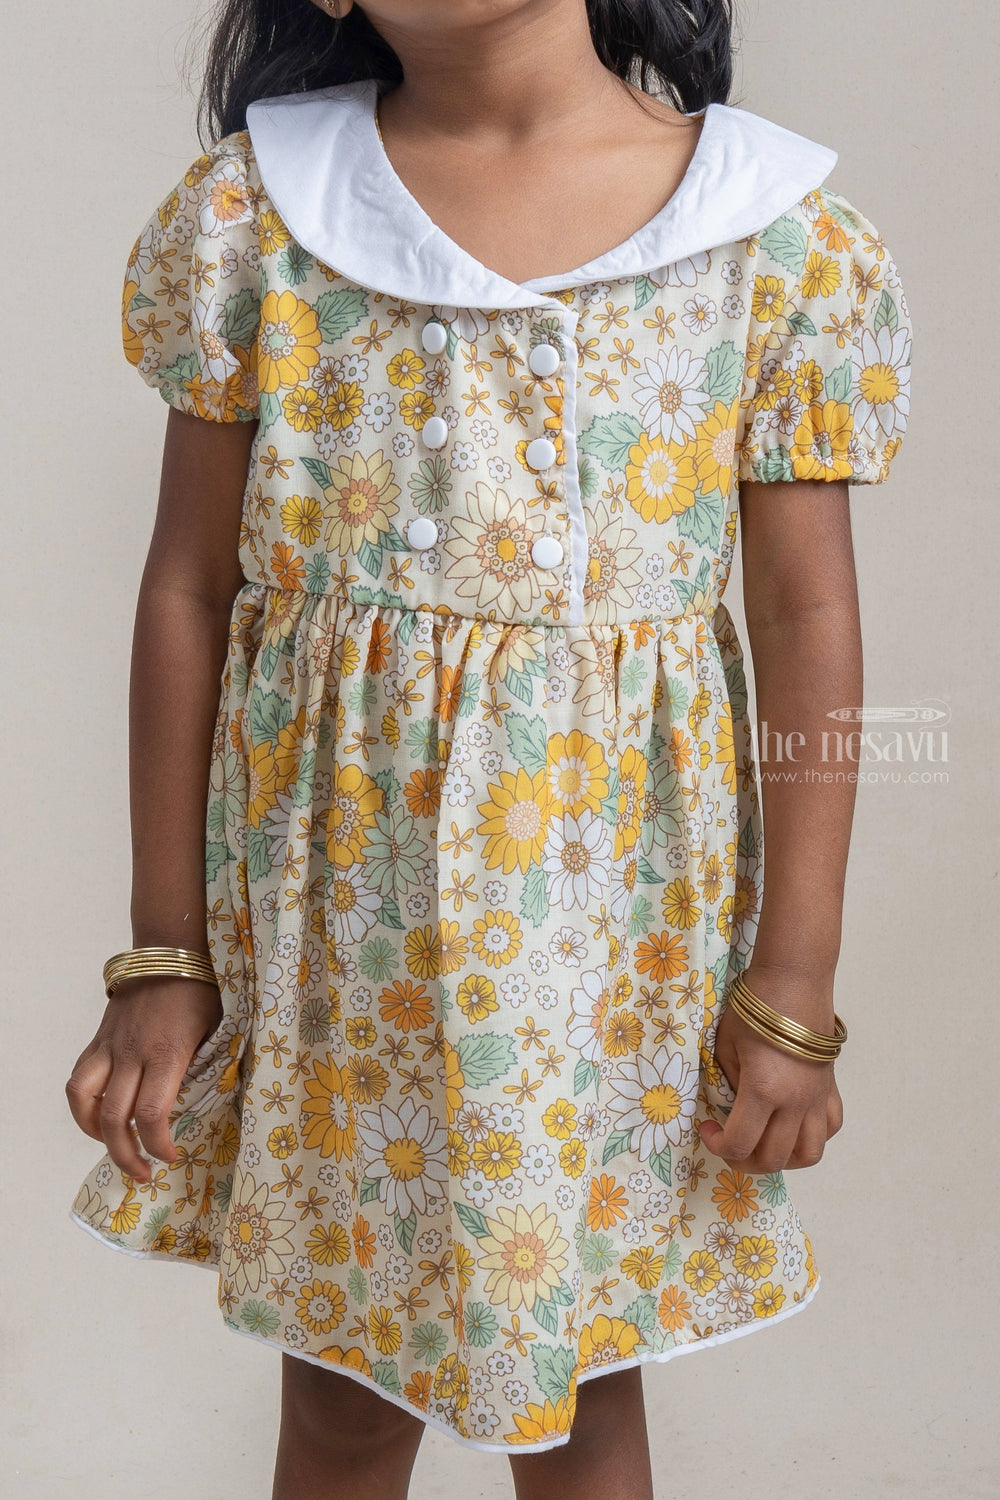 The Nesavu Frocks & Dresses Fancy Yellow Floral Printed Button Closure Daily Wear Cotton Frock For Girls psr silks Nesavu